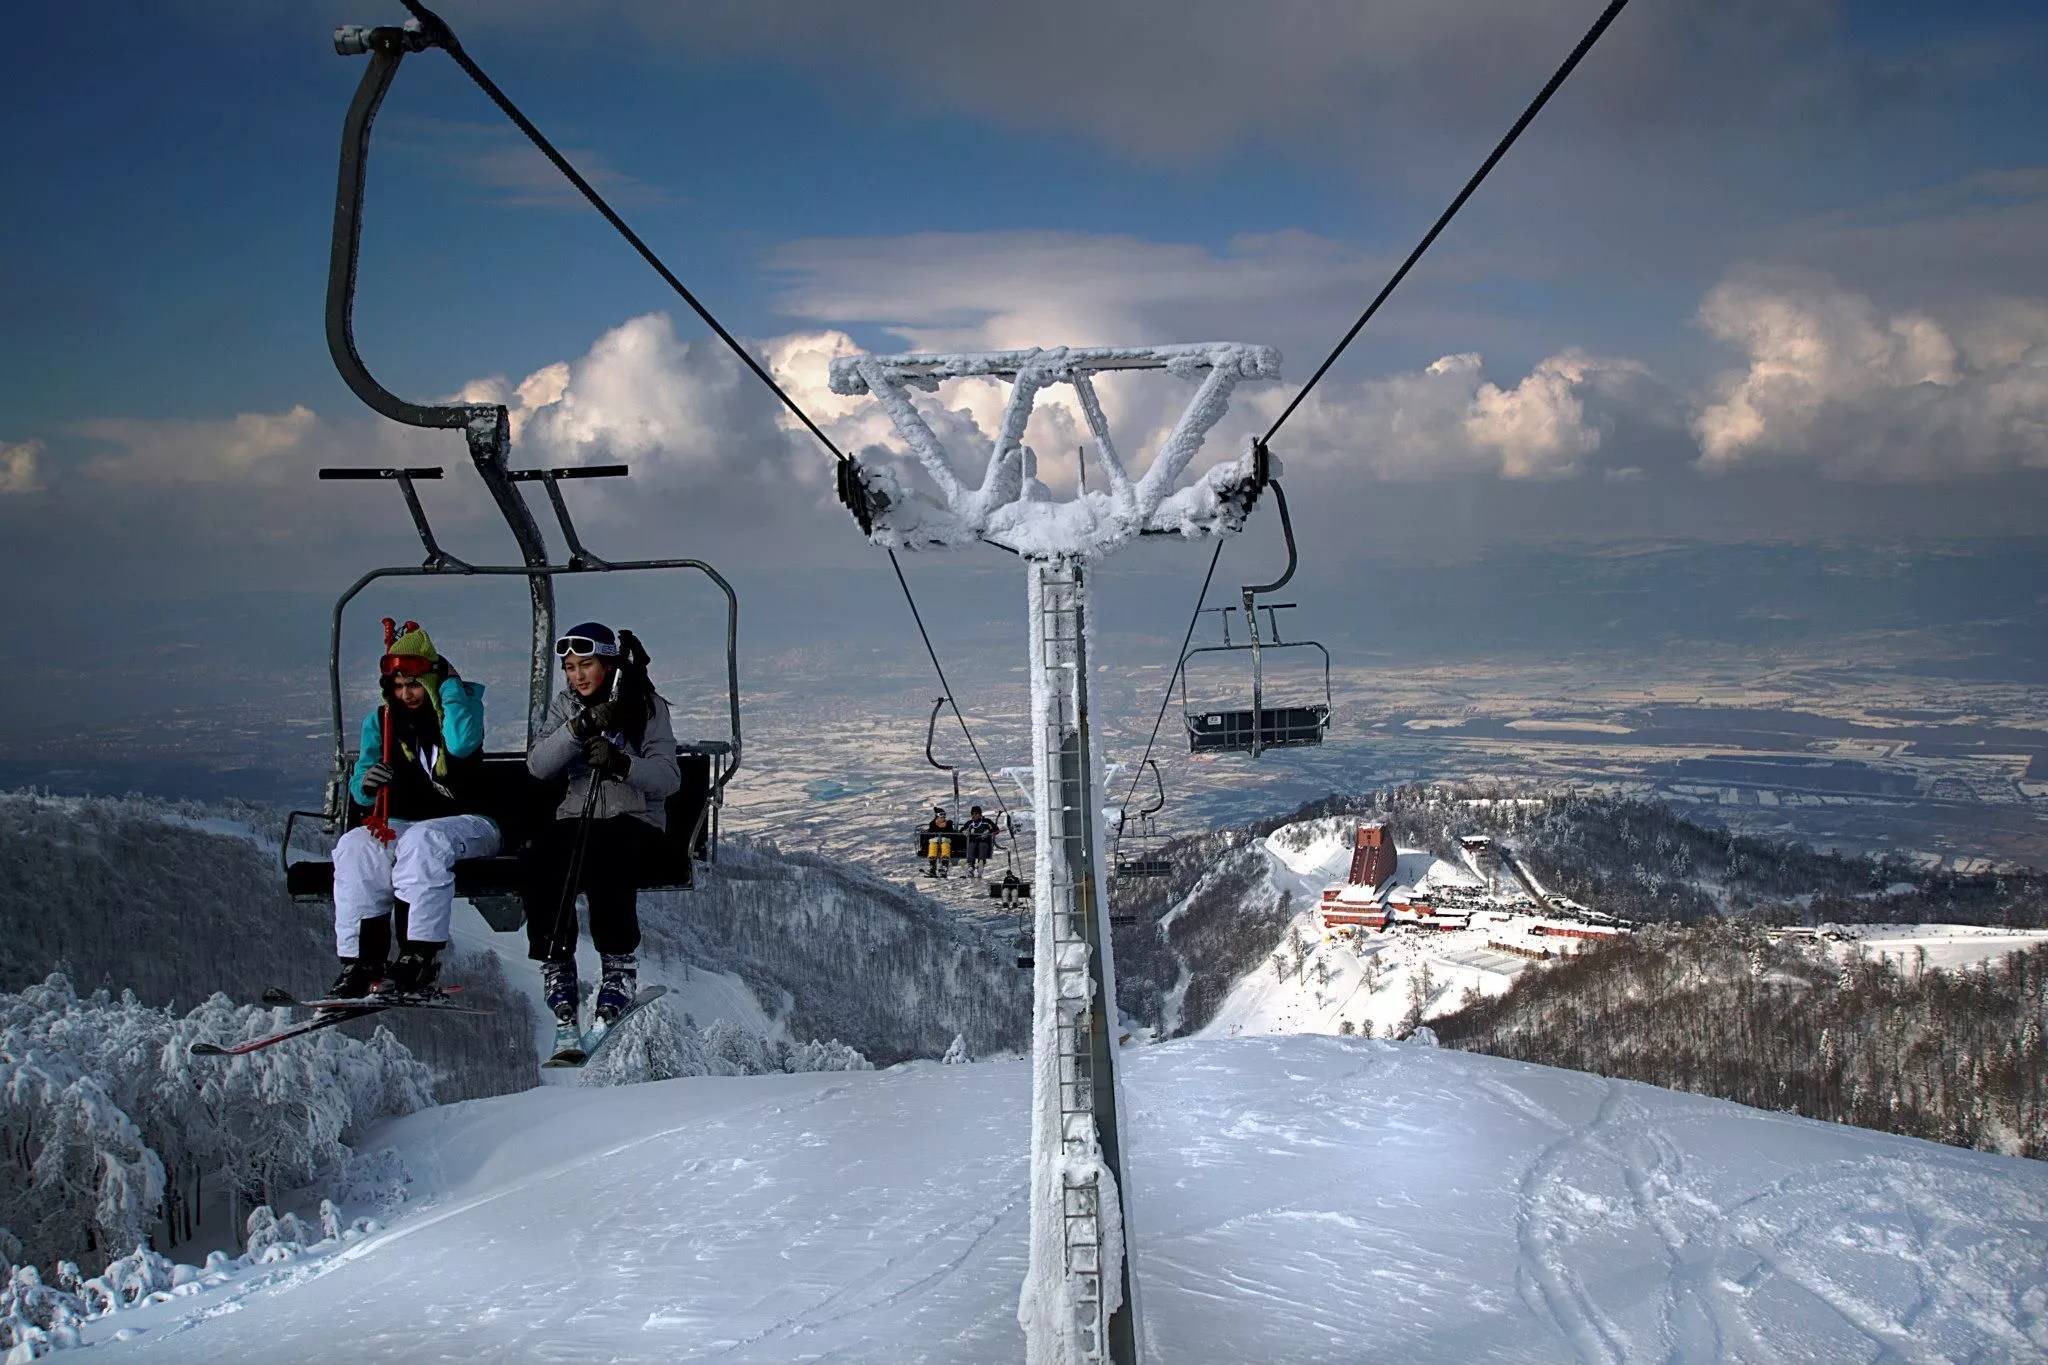 Kartepe Ski Centre in Turkey, Central Asia | Snowboarding,Skiing - Rated 4.1